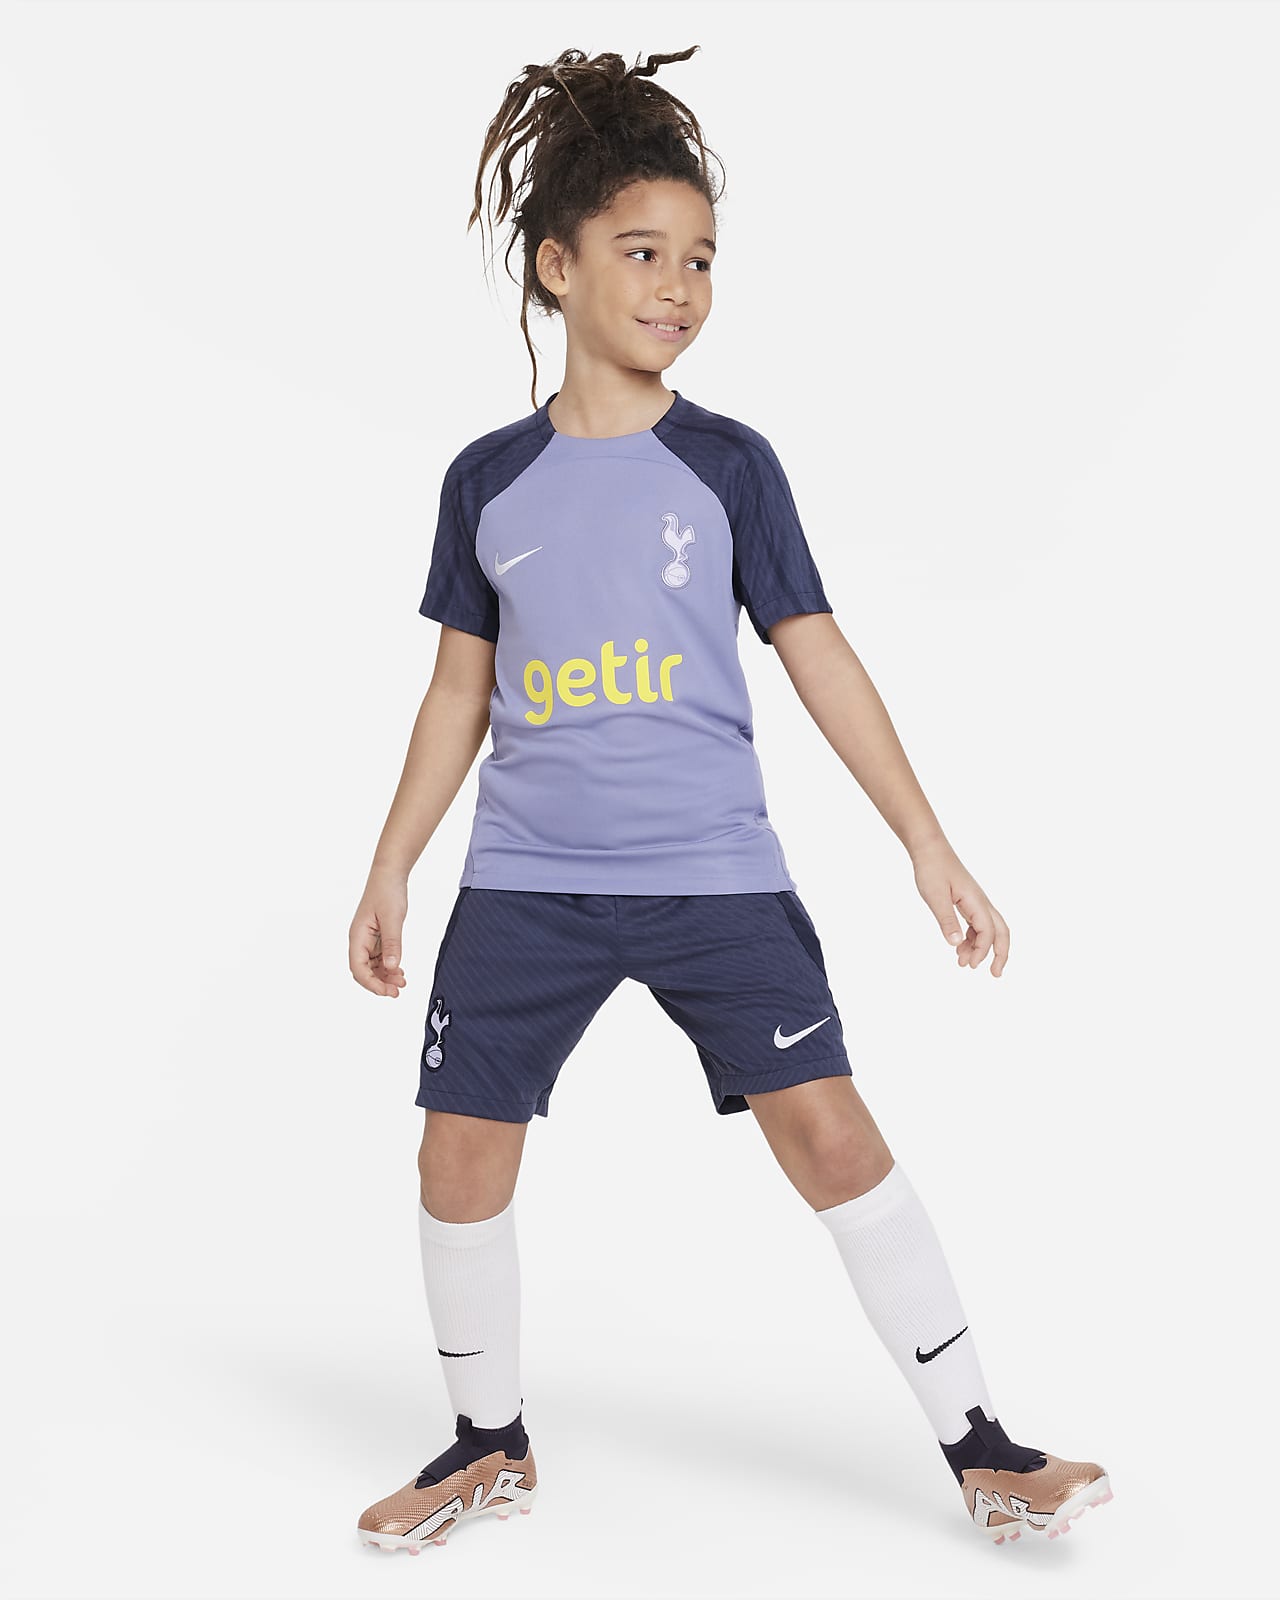 Tottenham Hotspur FC Kids Shirts, Tottenham Kids Kits, Jerseys